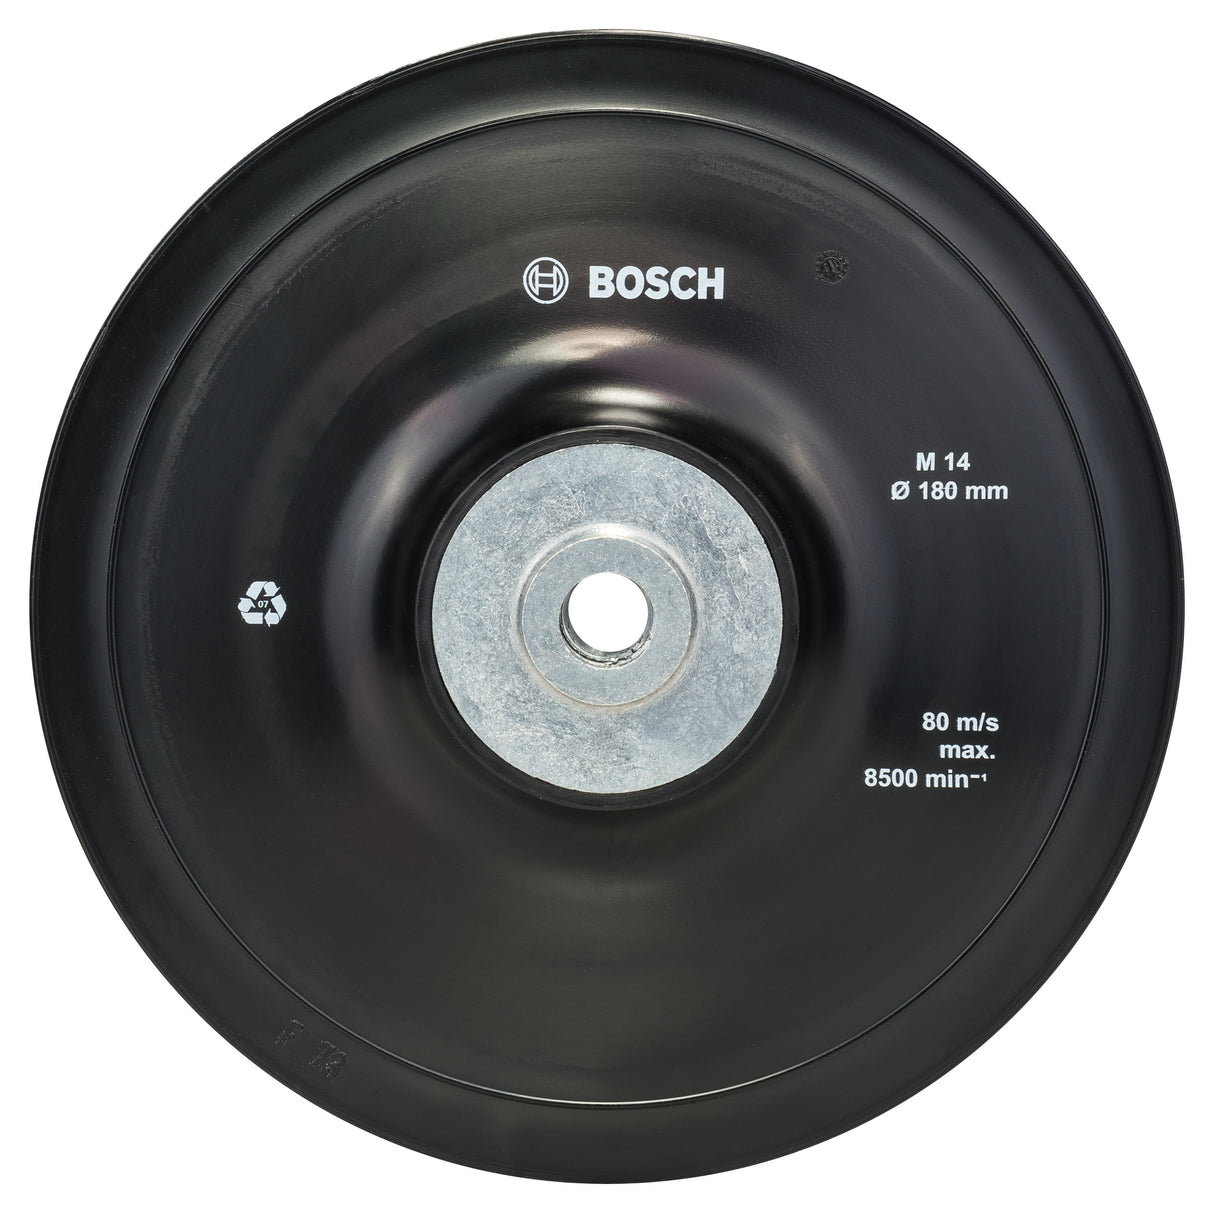 Bosch Professional Backing Pad - Standard M14, 180mm, 8,500 RPM